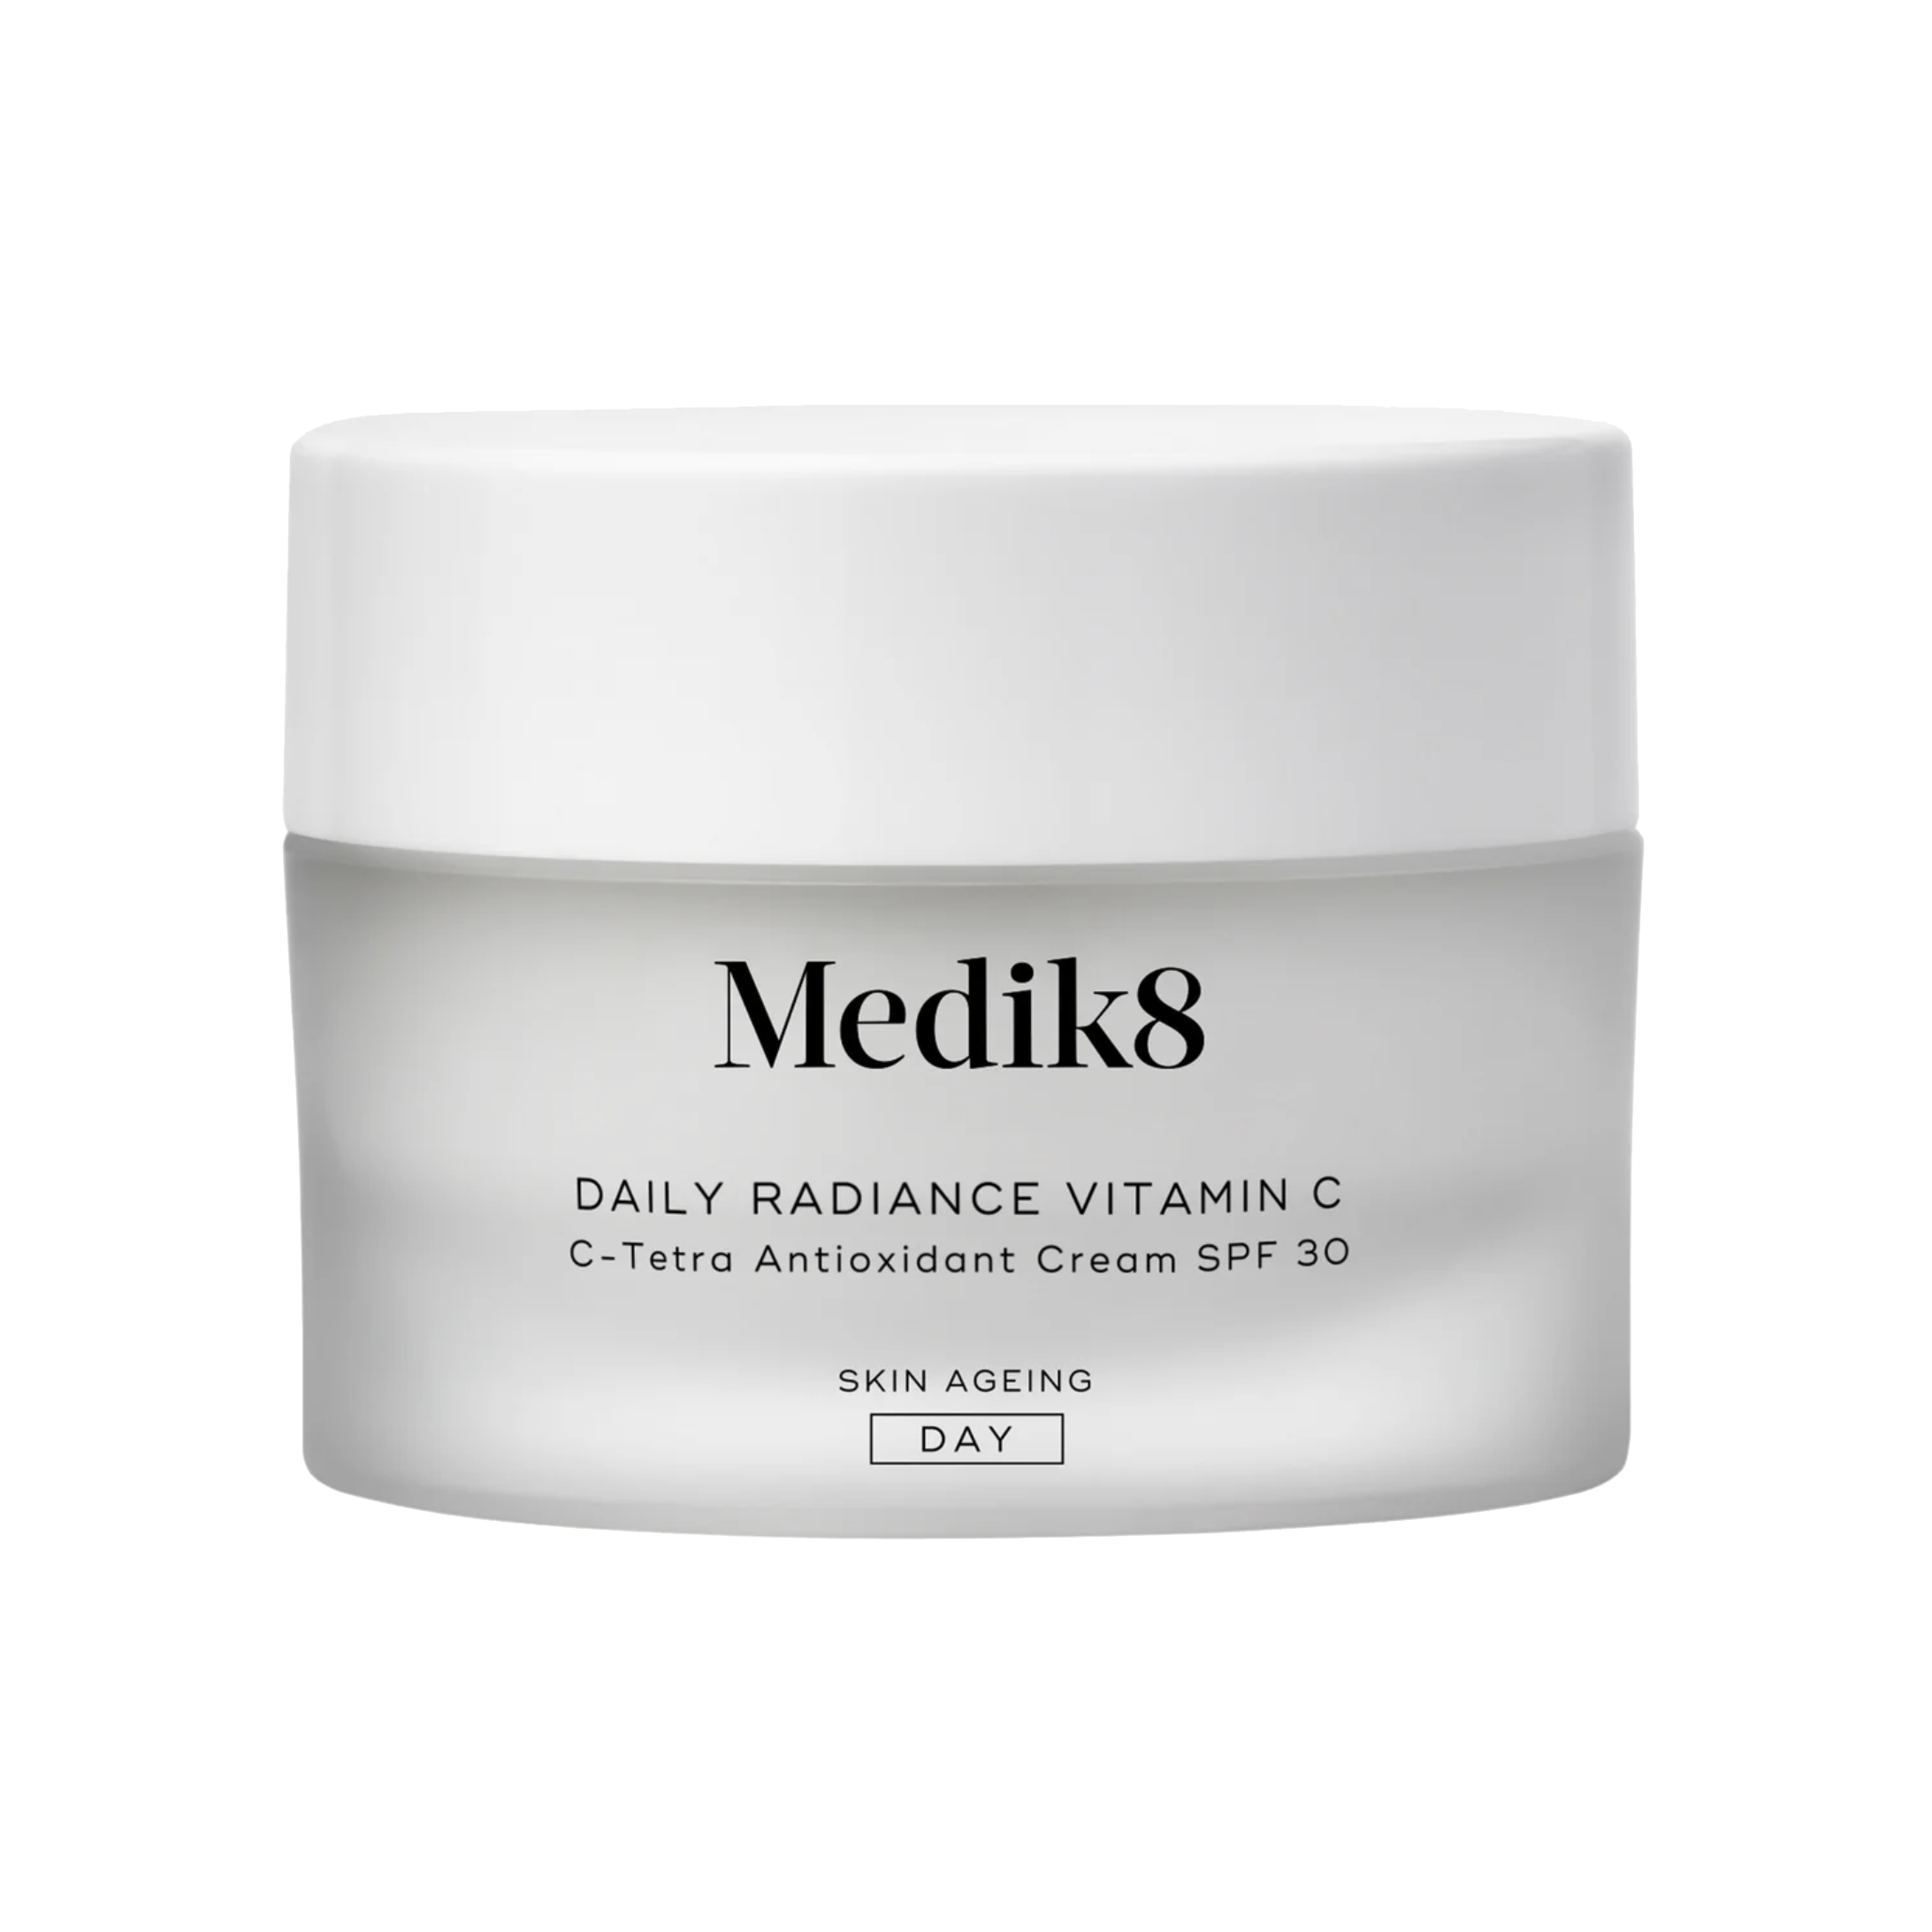 Daily Radiance Vitamin C Medik8